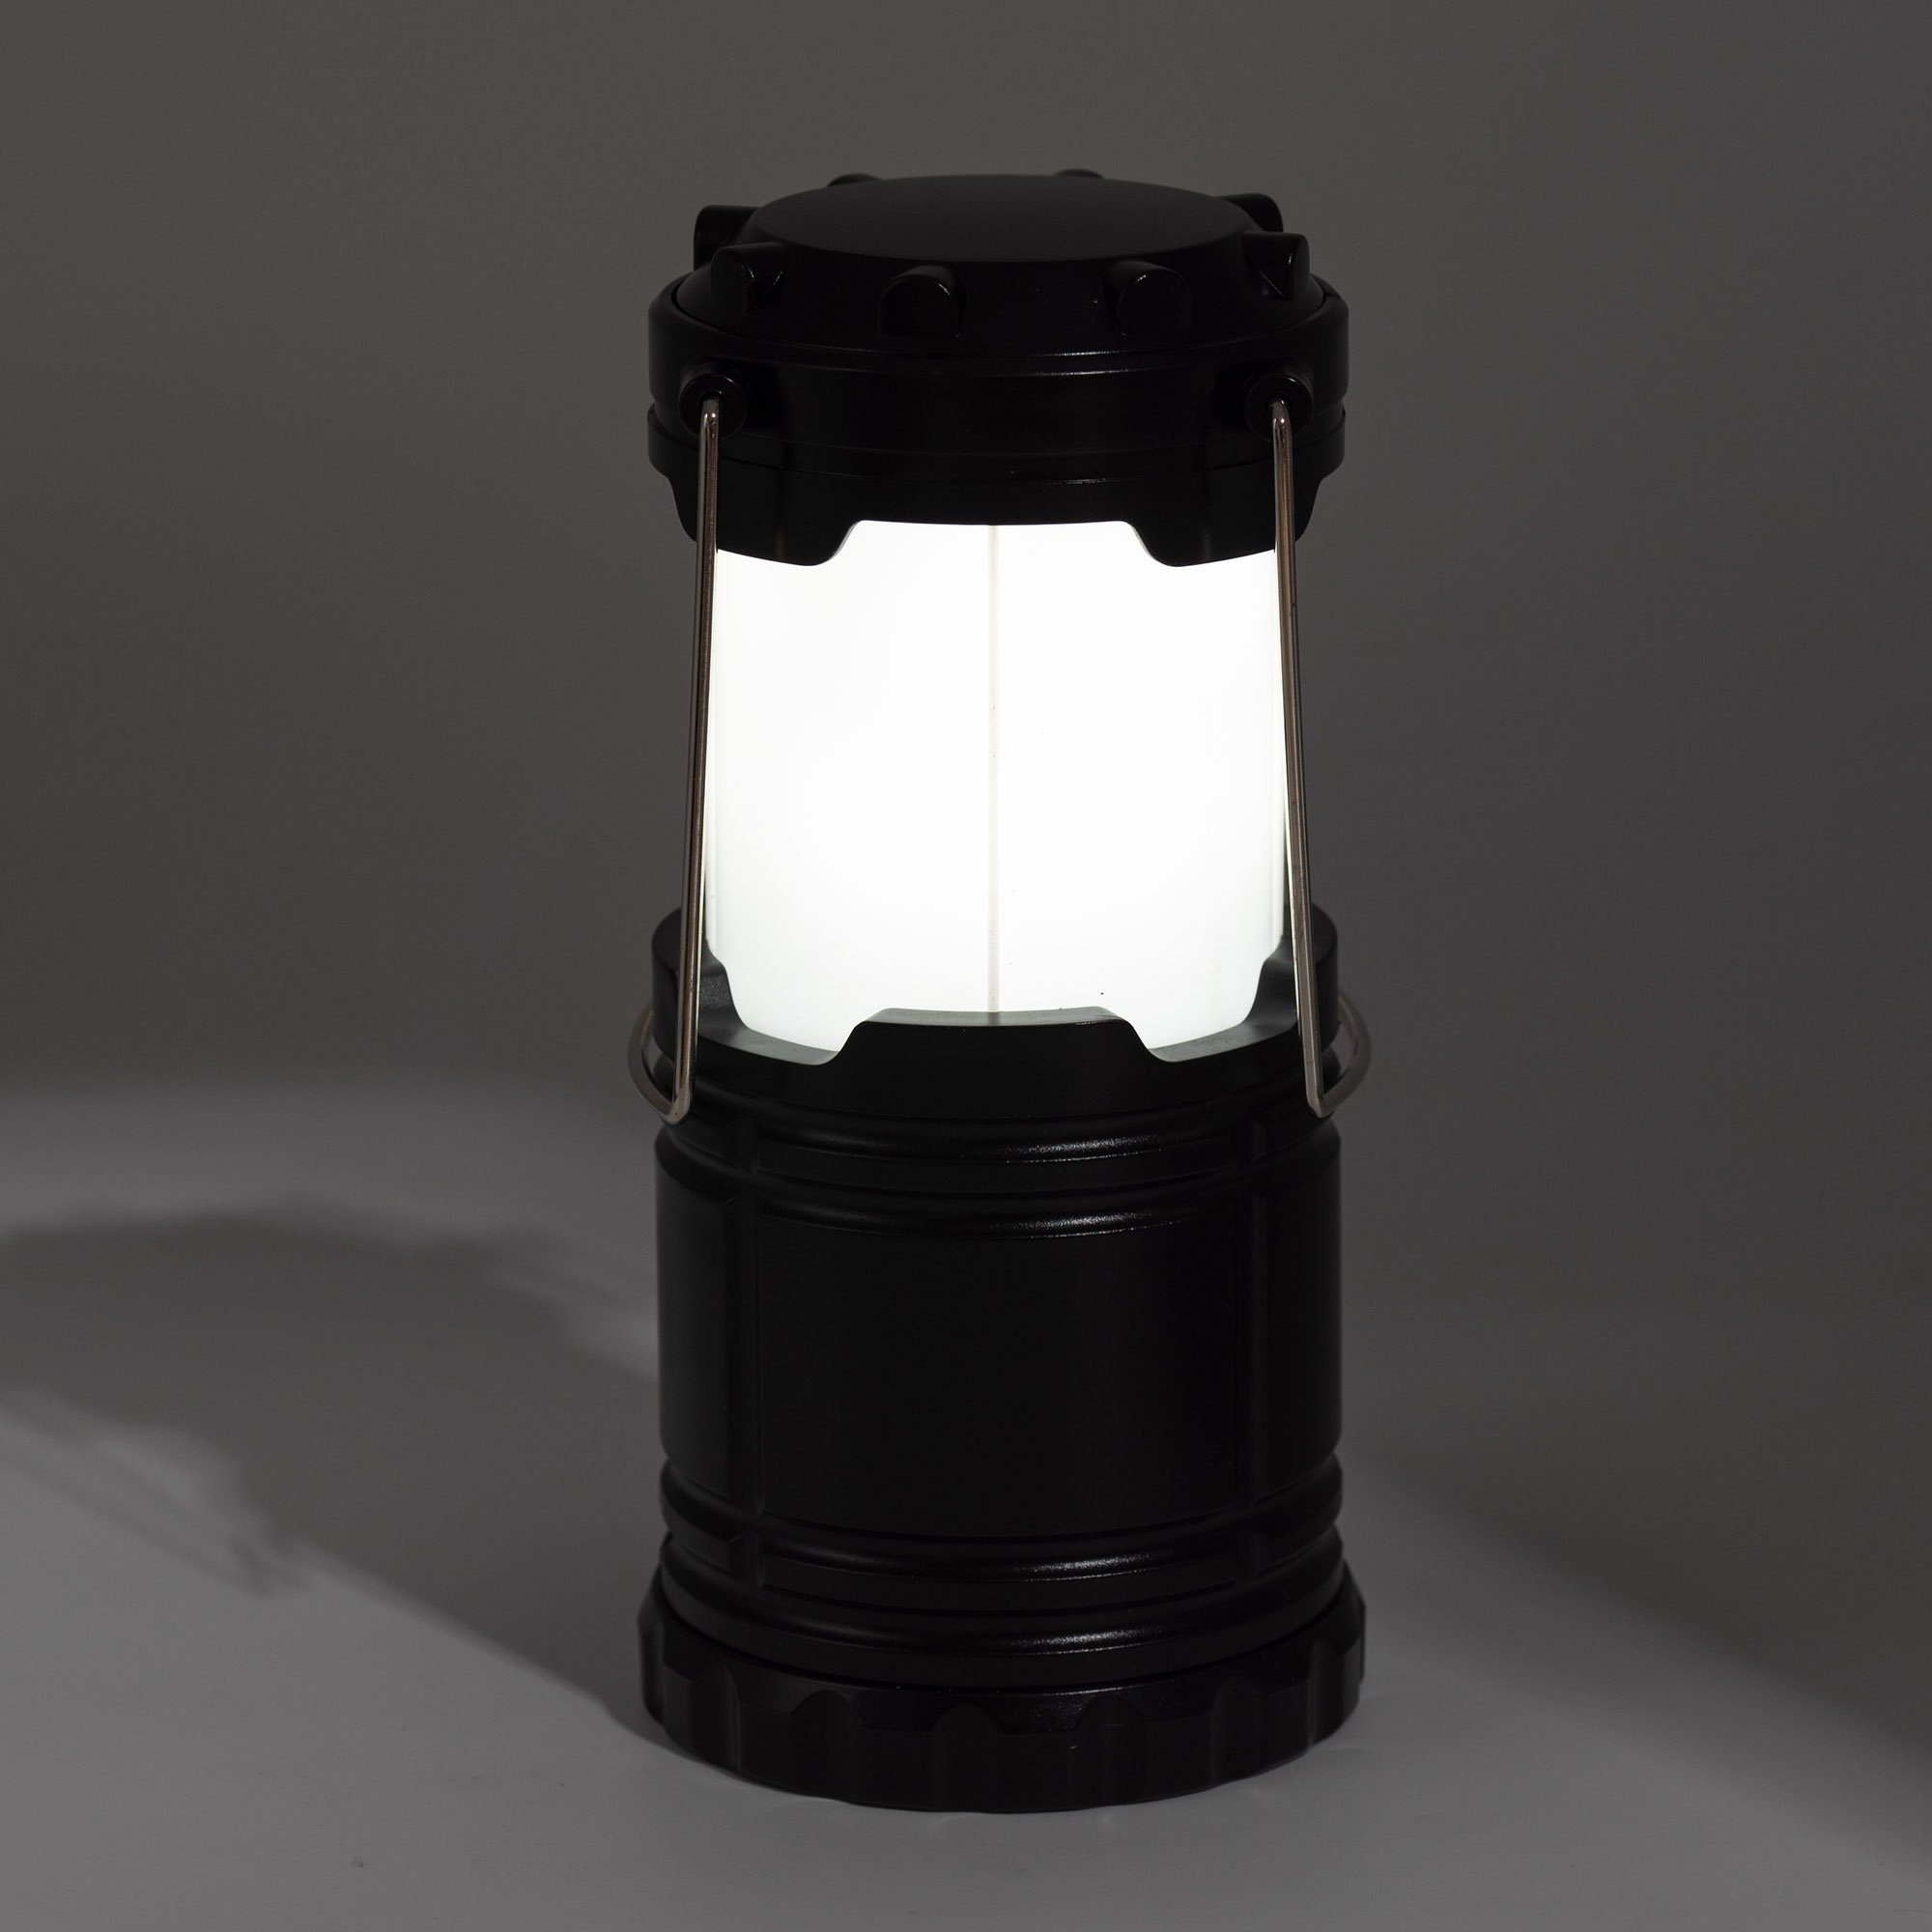 BENSON Taschenlampe 2in1 LED Campinglampe Flammen, Effekt Zelt Leuchte Lampe Garten, Laterne, Batterie